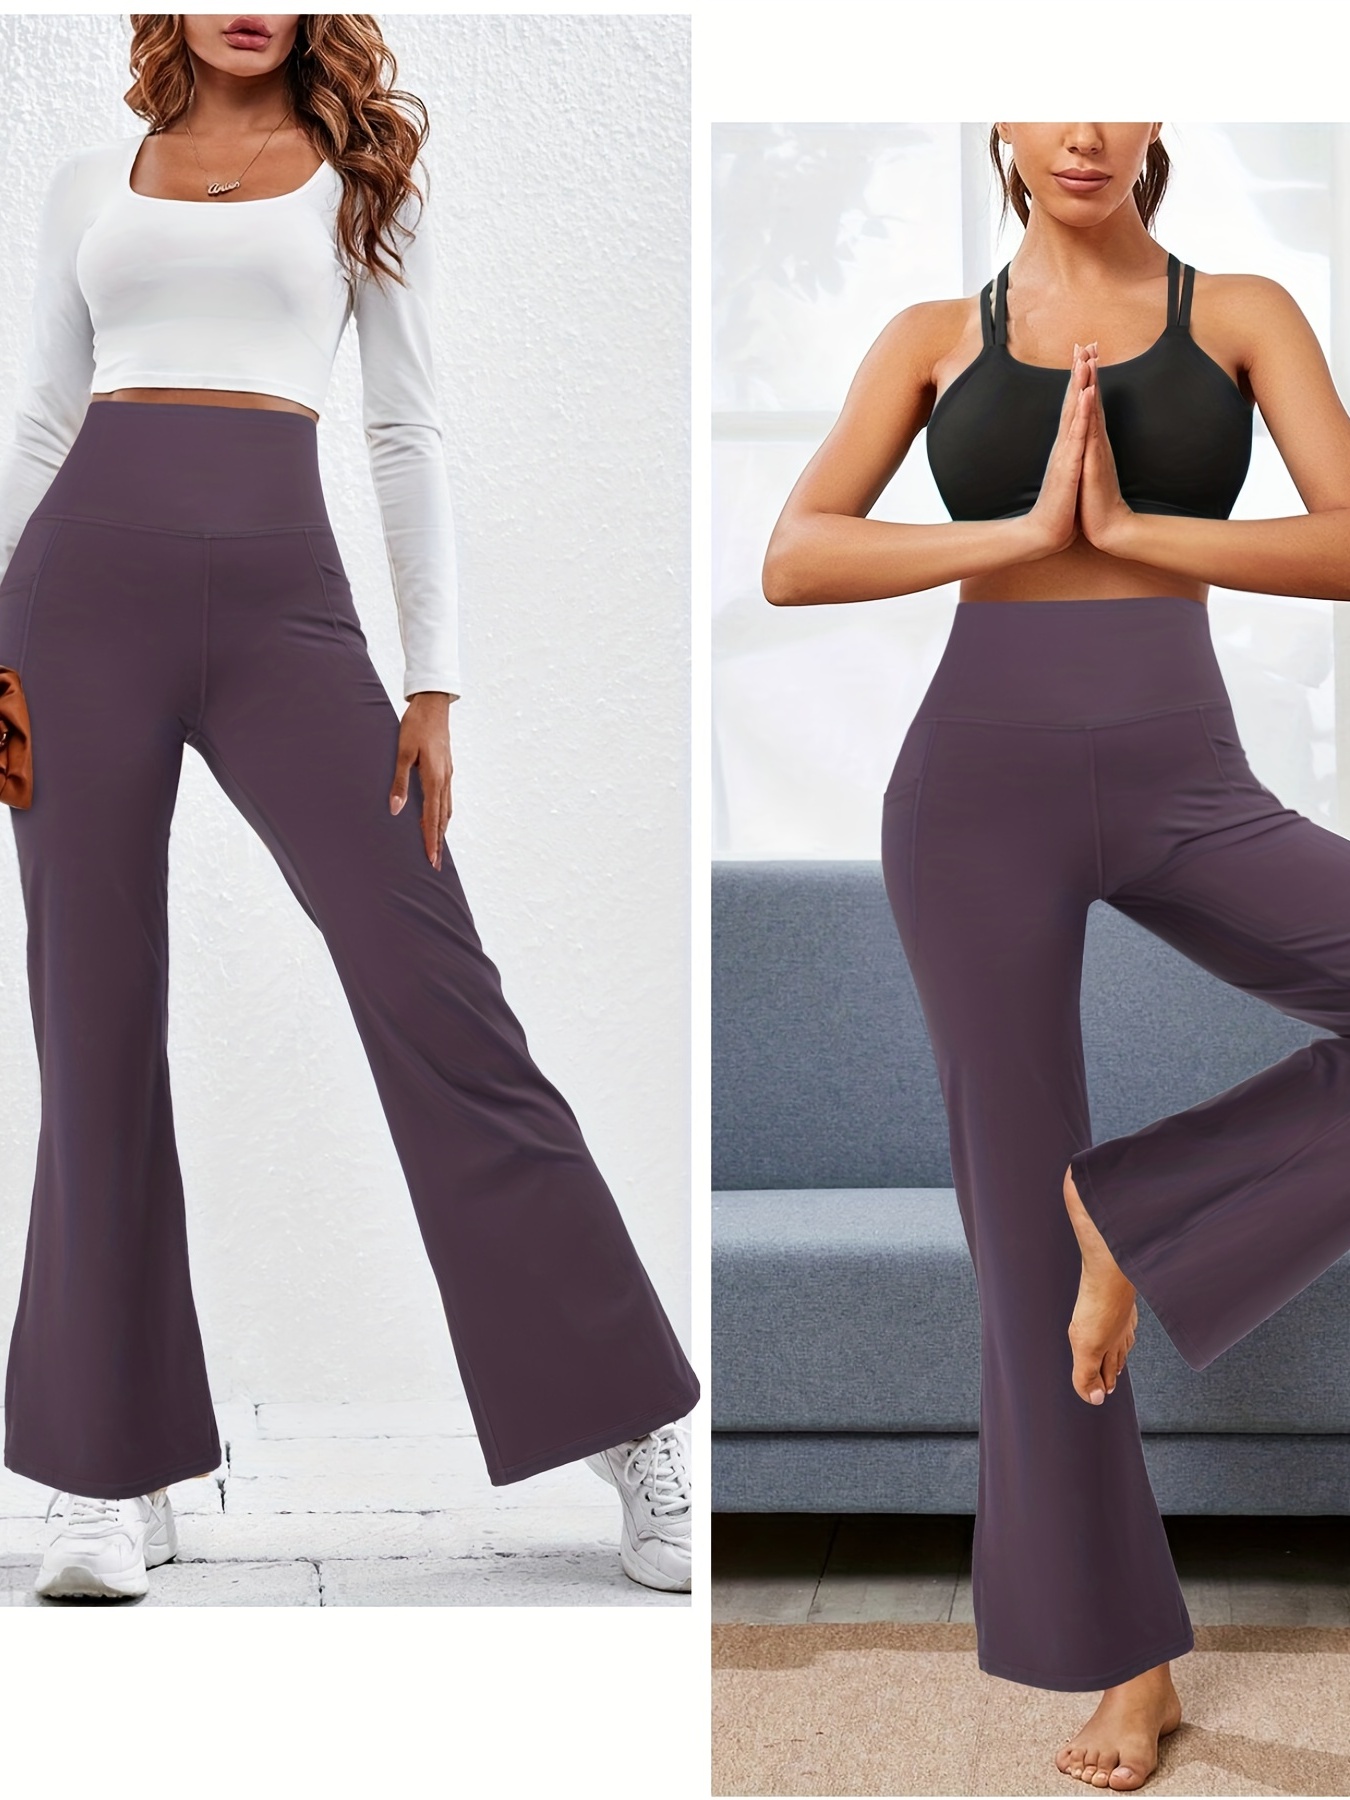 Bootcut Yoga Pants for Women High Waisted Yoga Pants with Pockets for Women  Bootleg Work Pants Workout Pants 